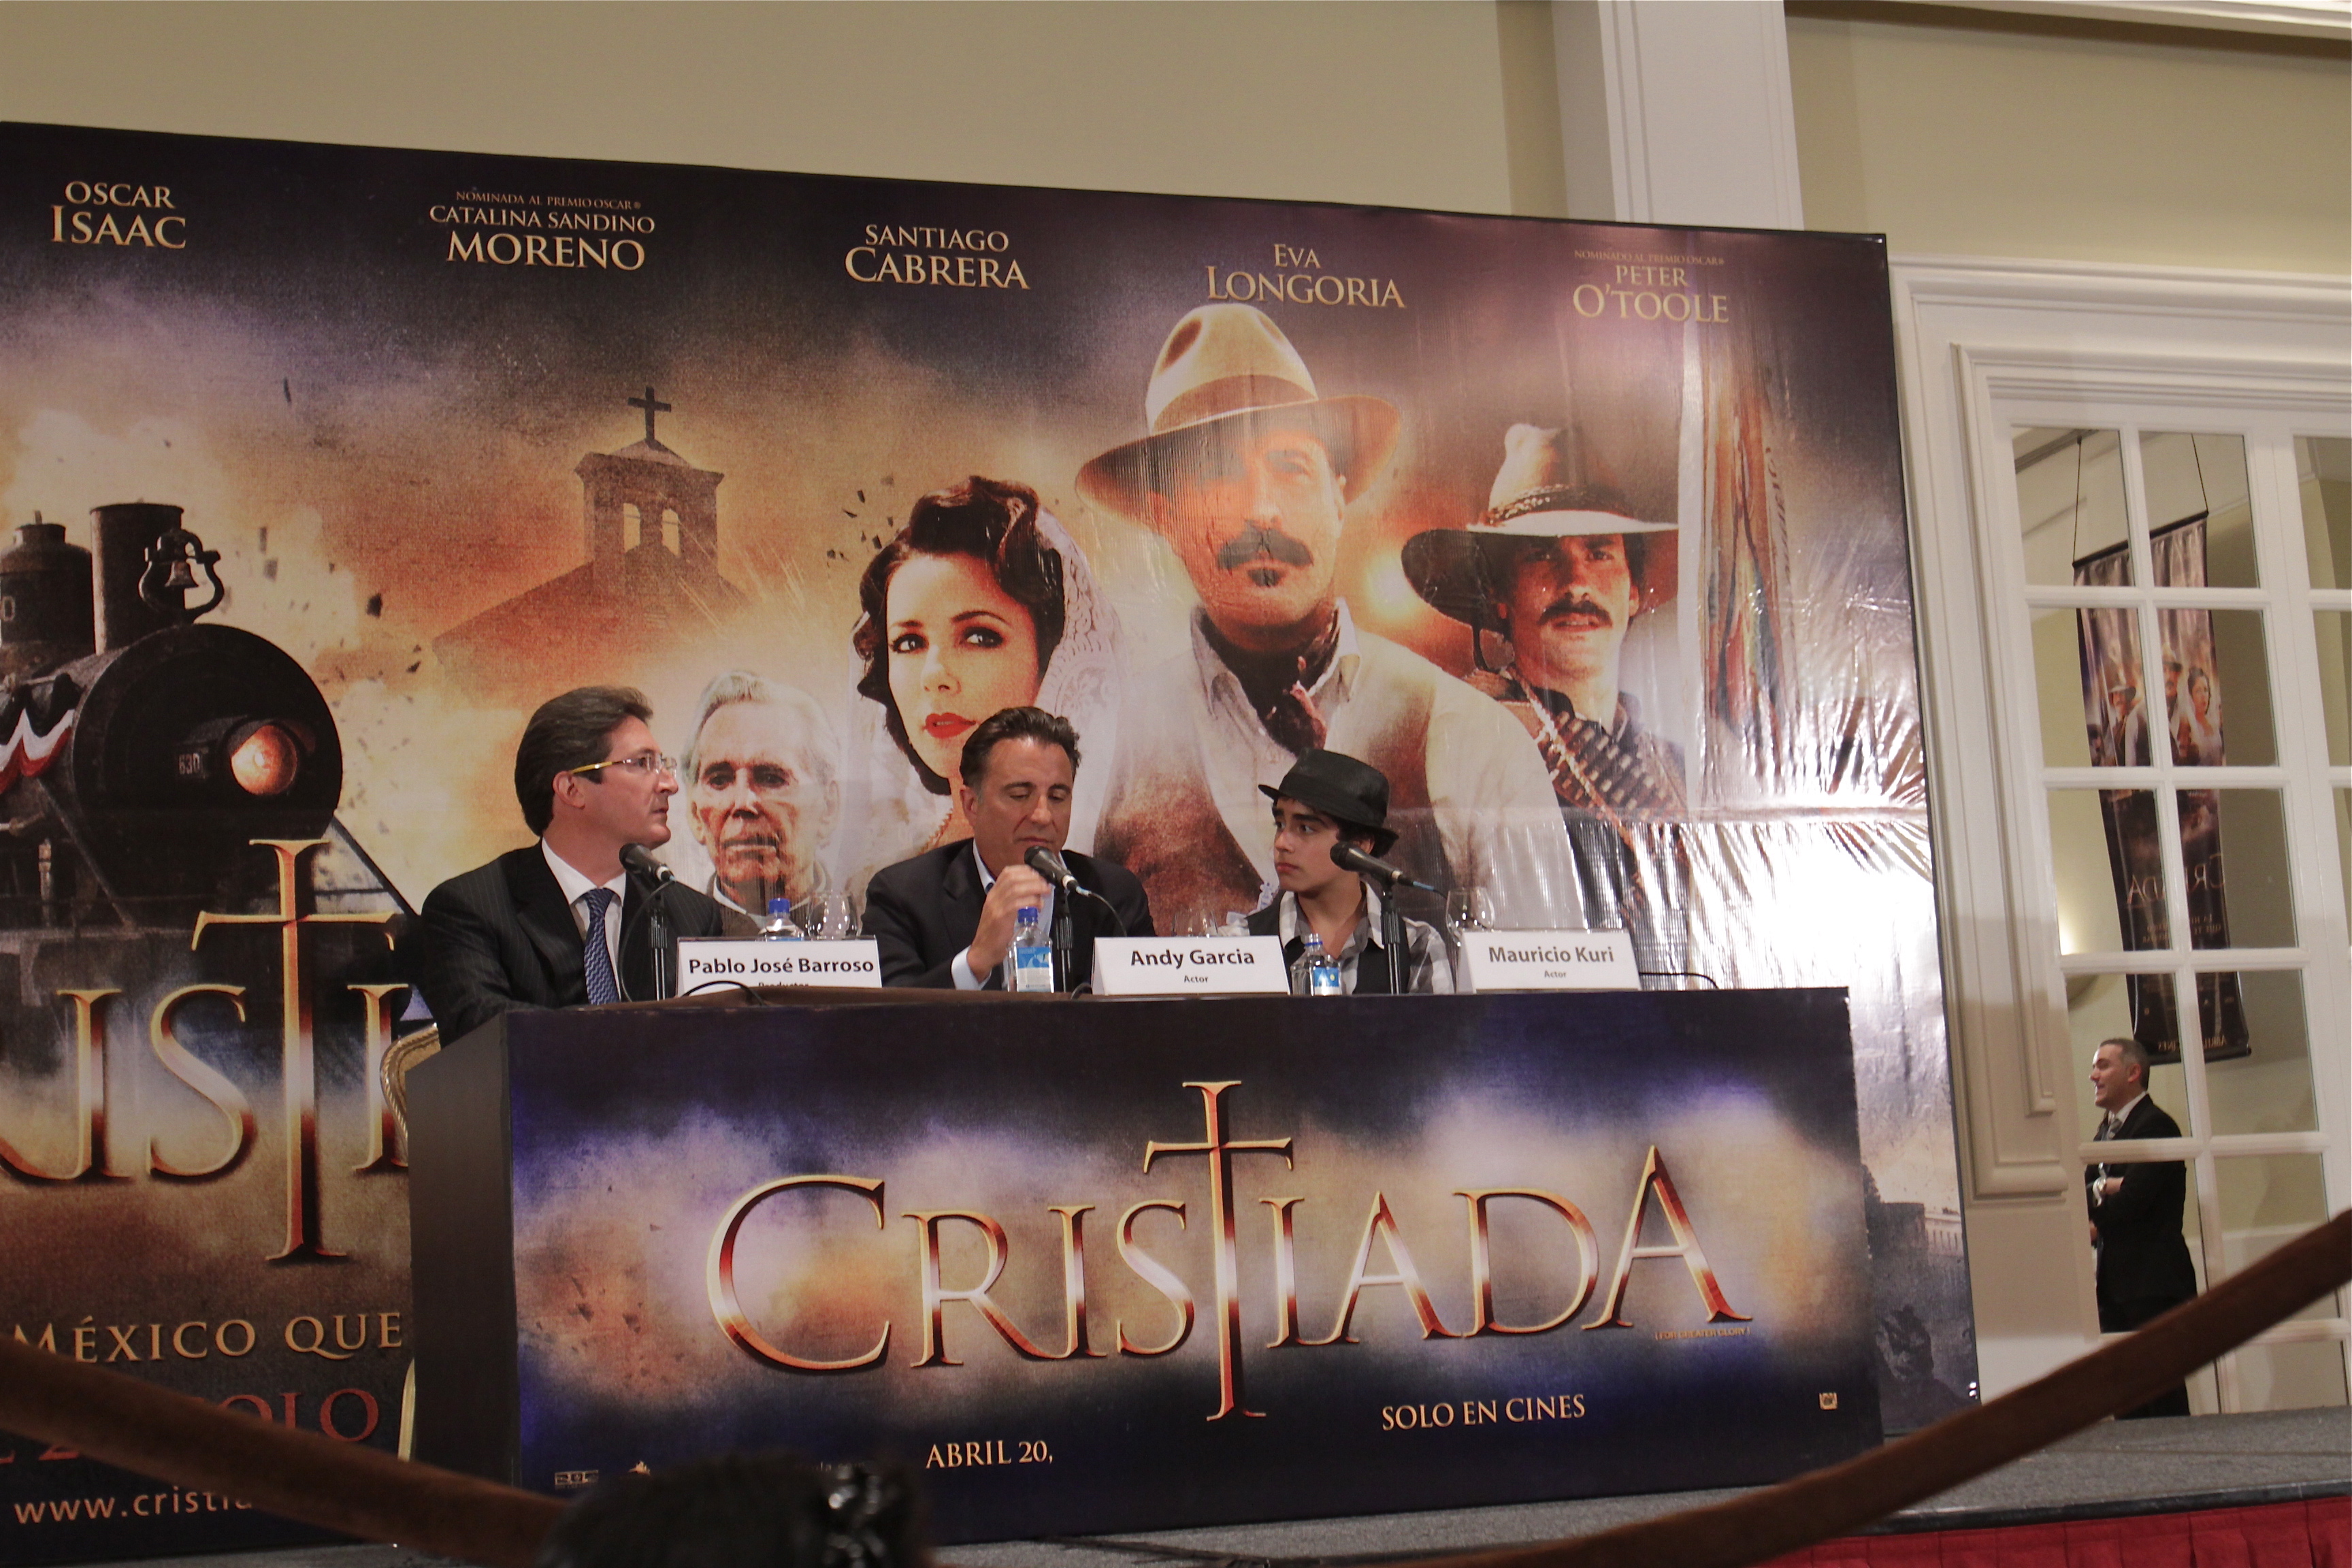 Mauricio at event: Cristiada (For Greater Glory) at Four Seasons Mexico.